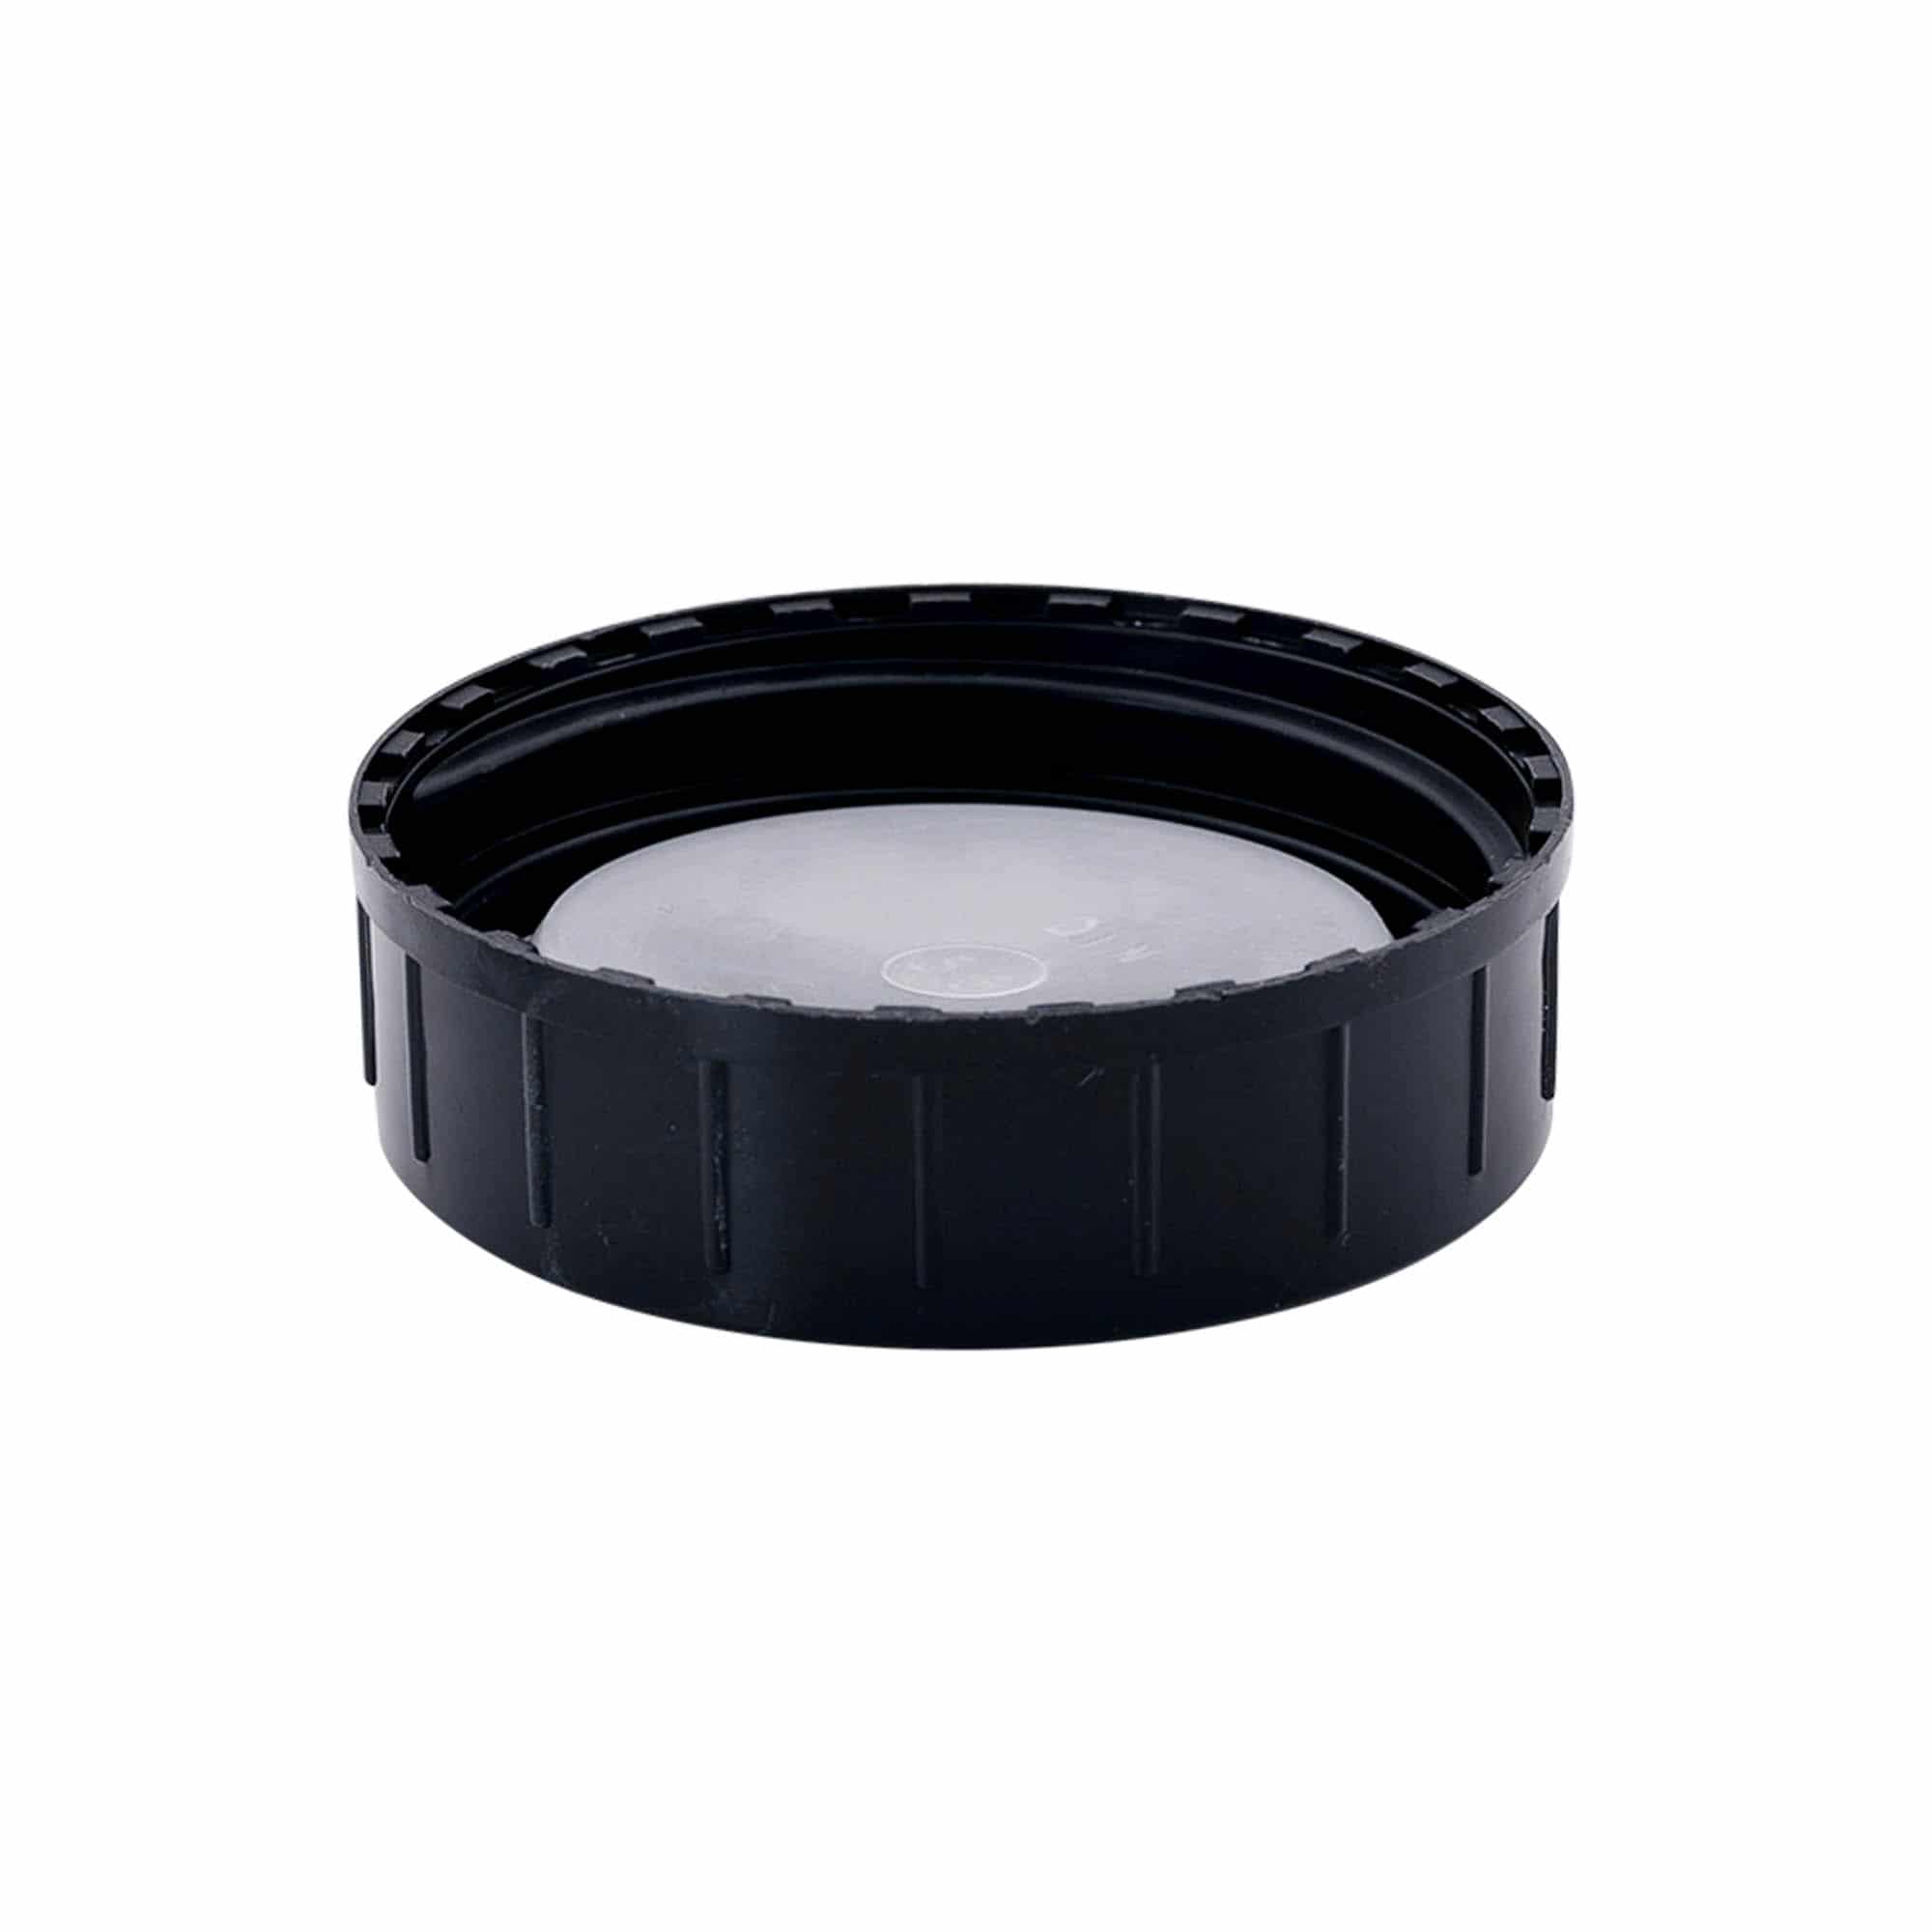 Screw cap, PP plastic, black, for opening: DIN 55